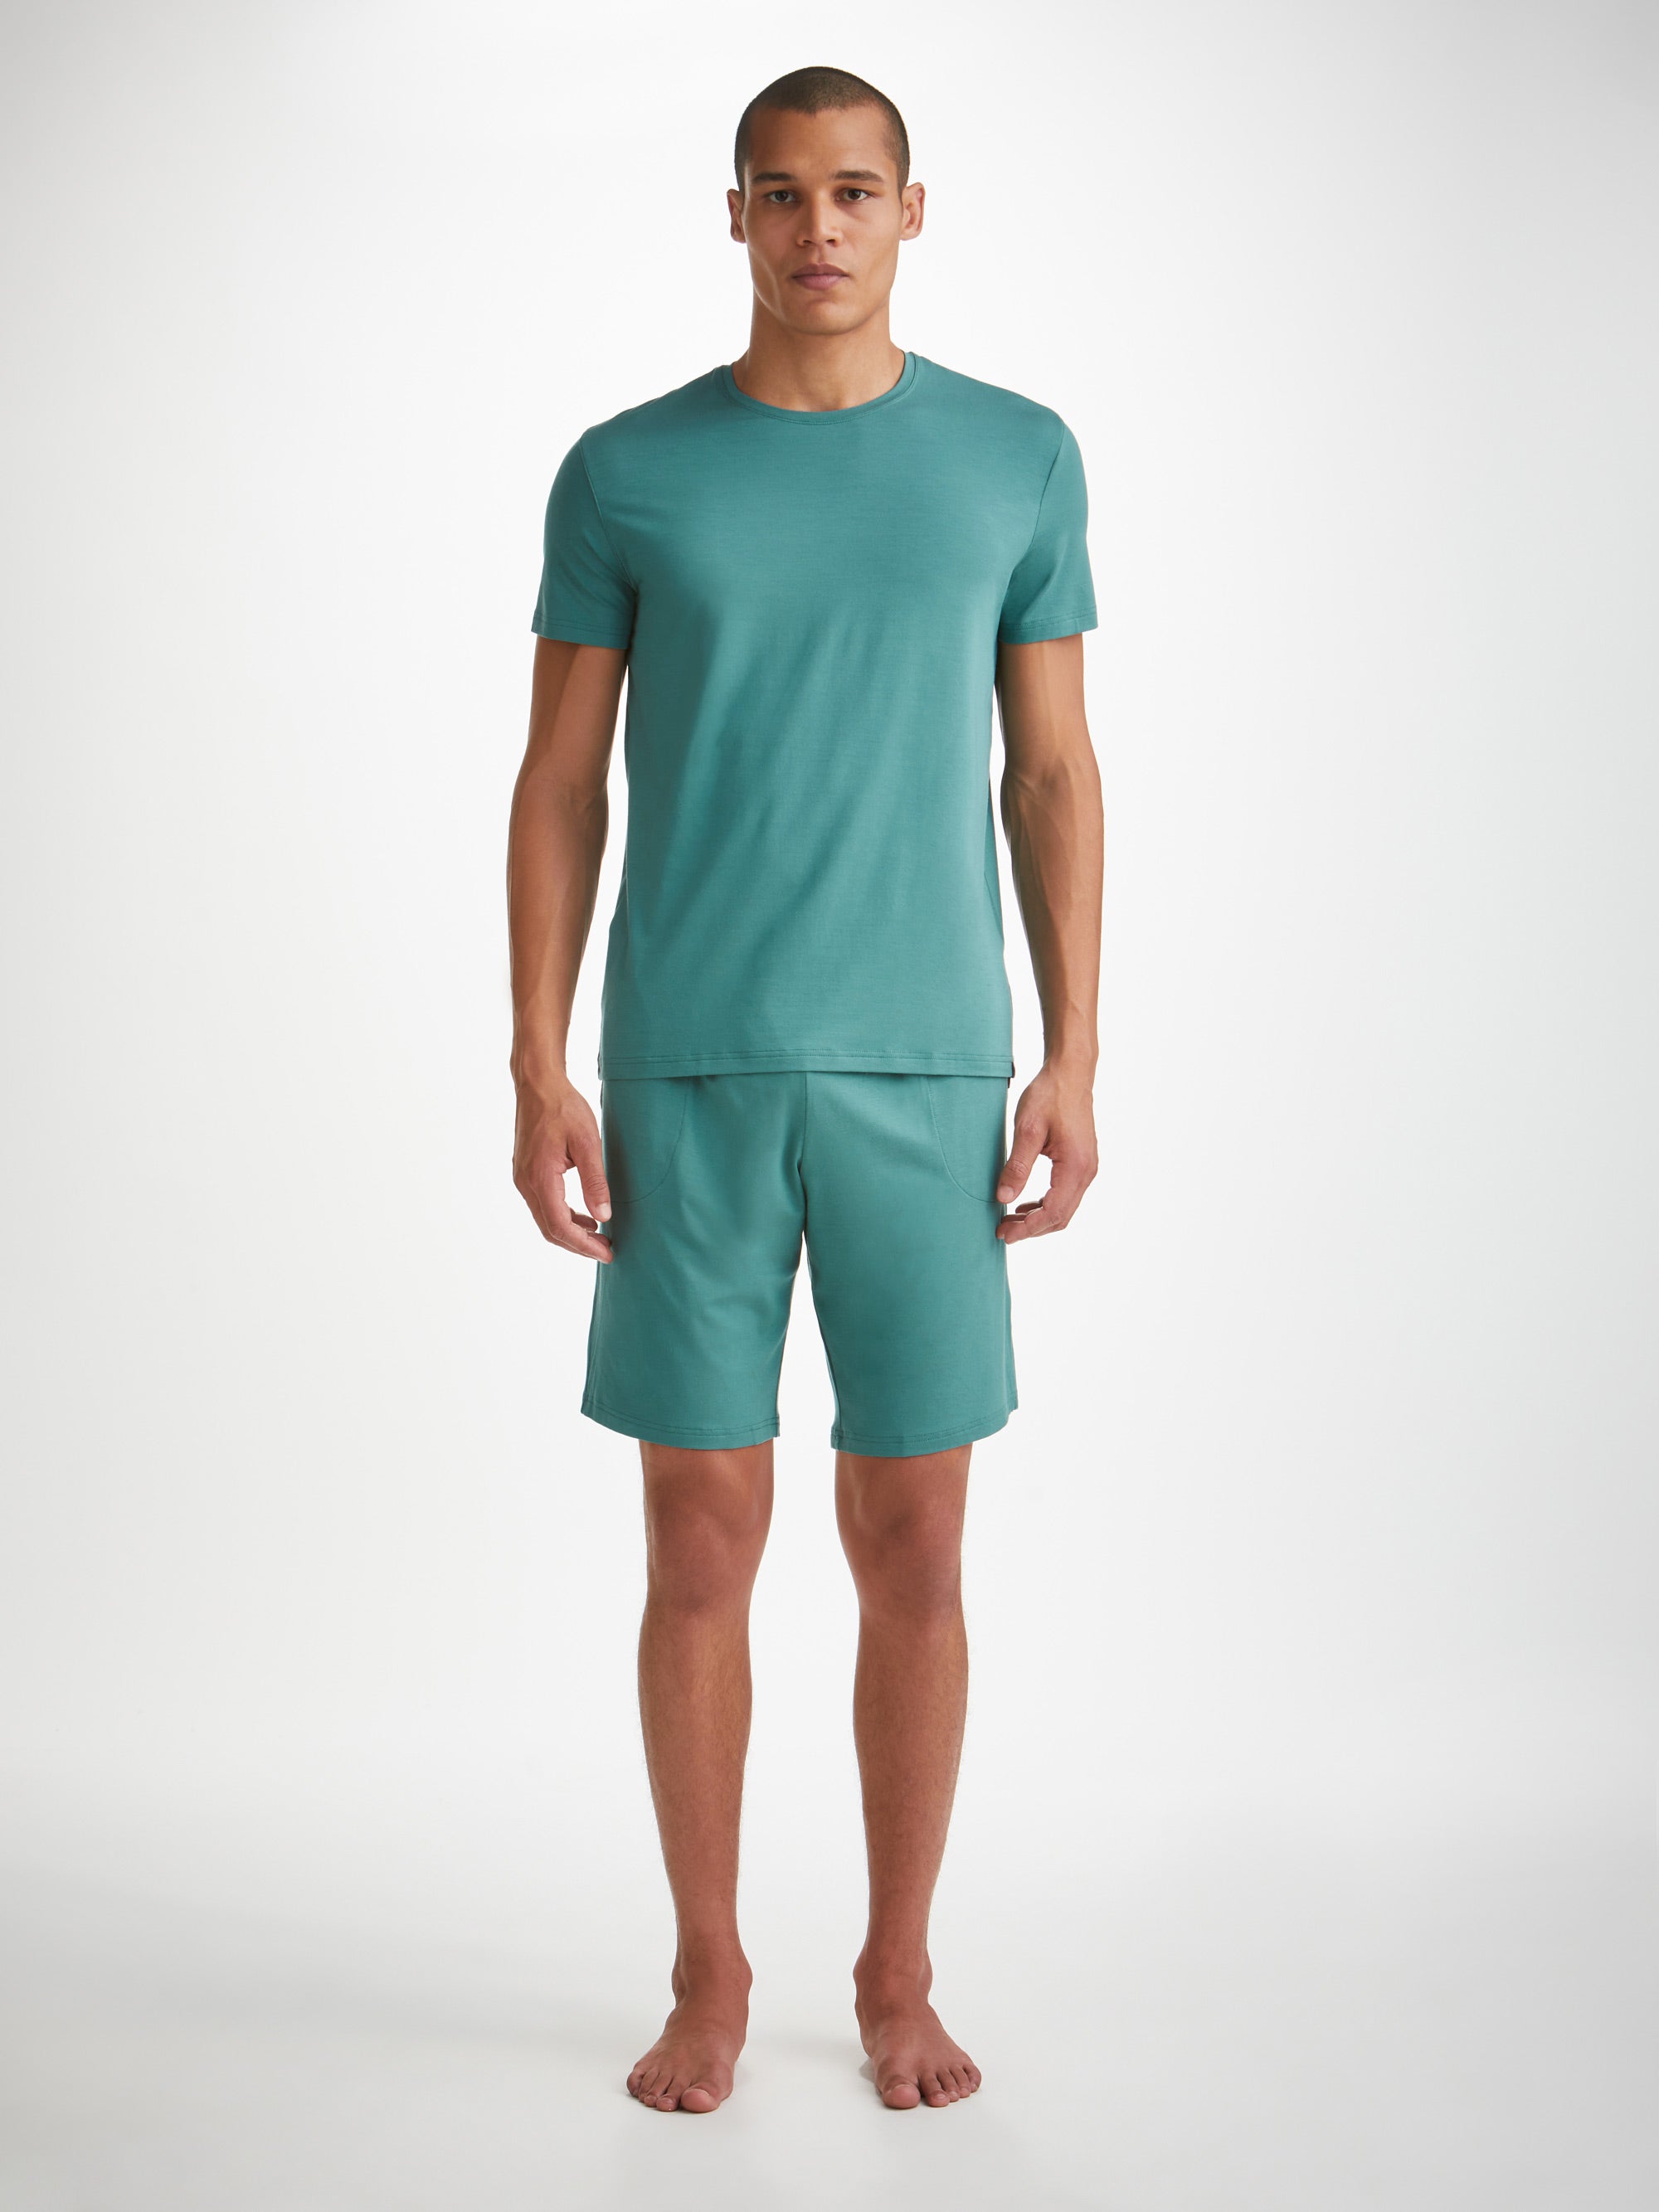 Men's Lounge Shorts Basel Micro Modal Stretch Teal